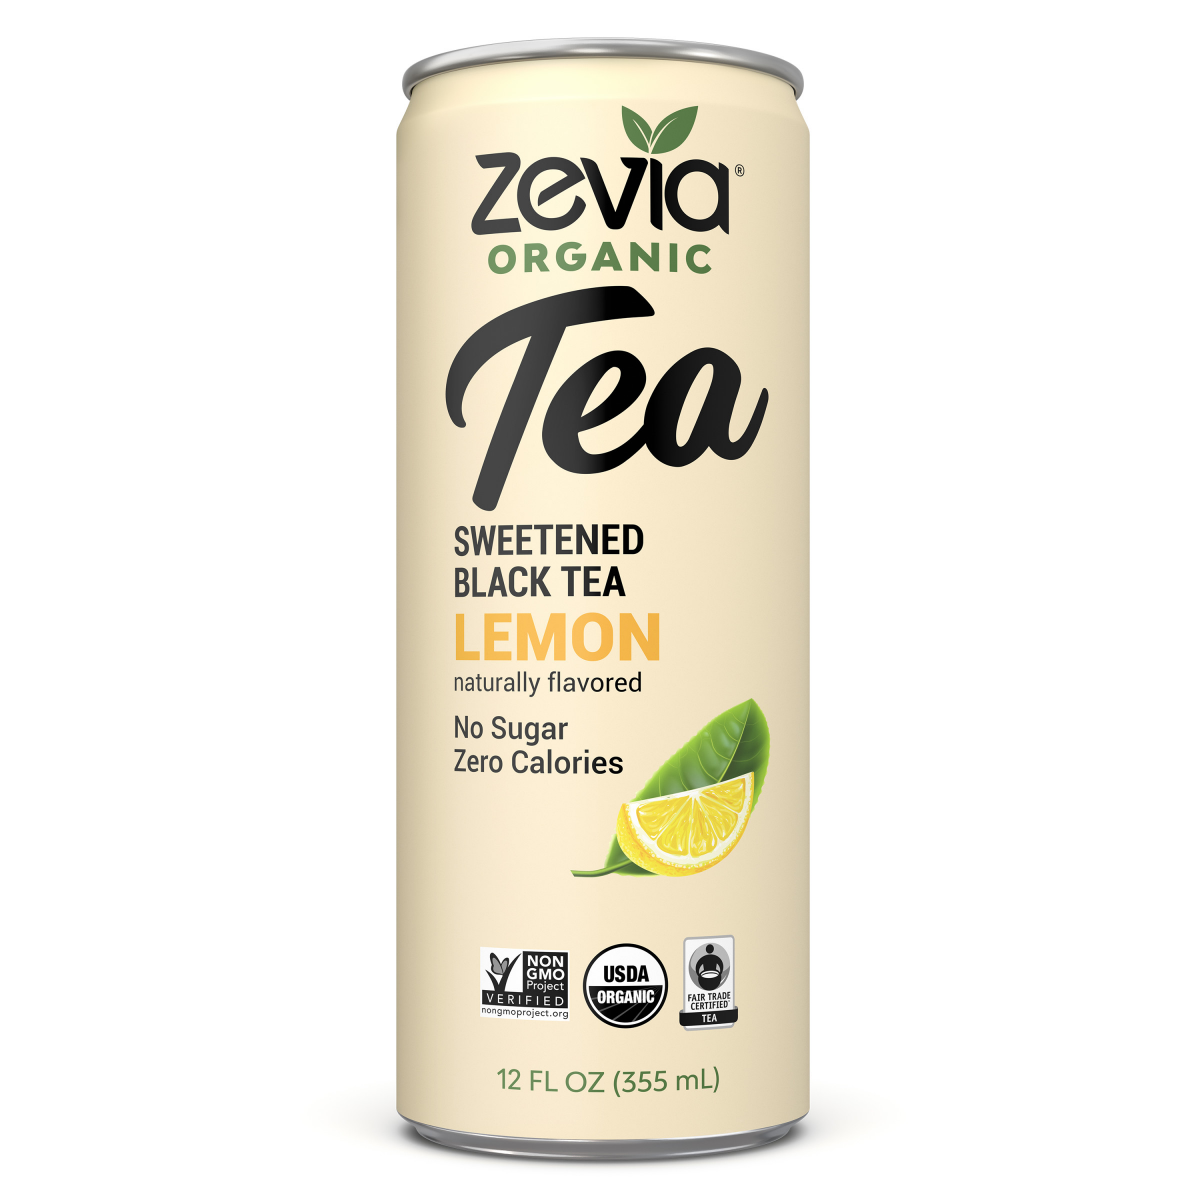 slide 1 of 8, Zevia Organic Black Tea Lemon single can - 12 fl oz, 12 fl oz